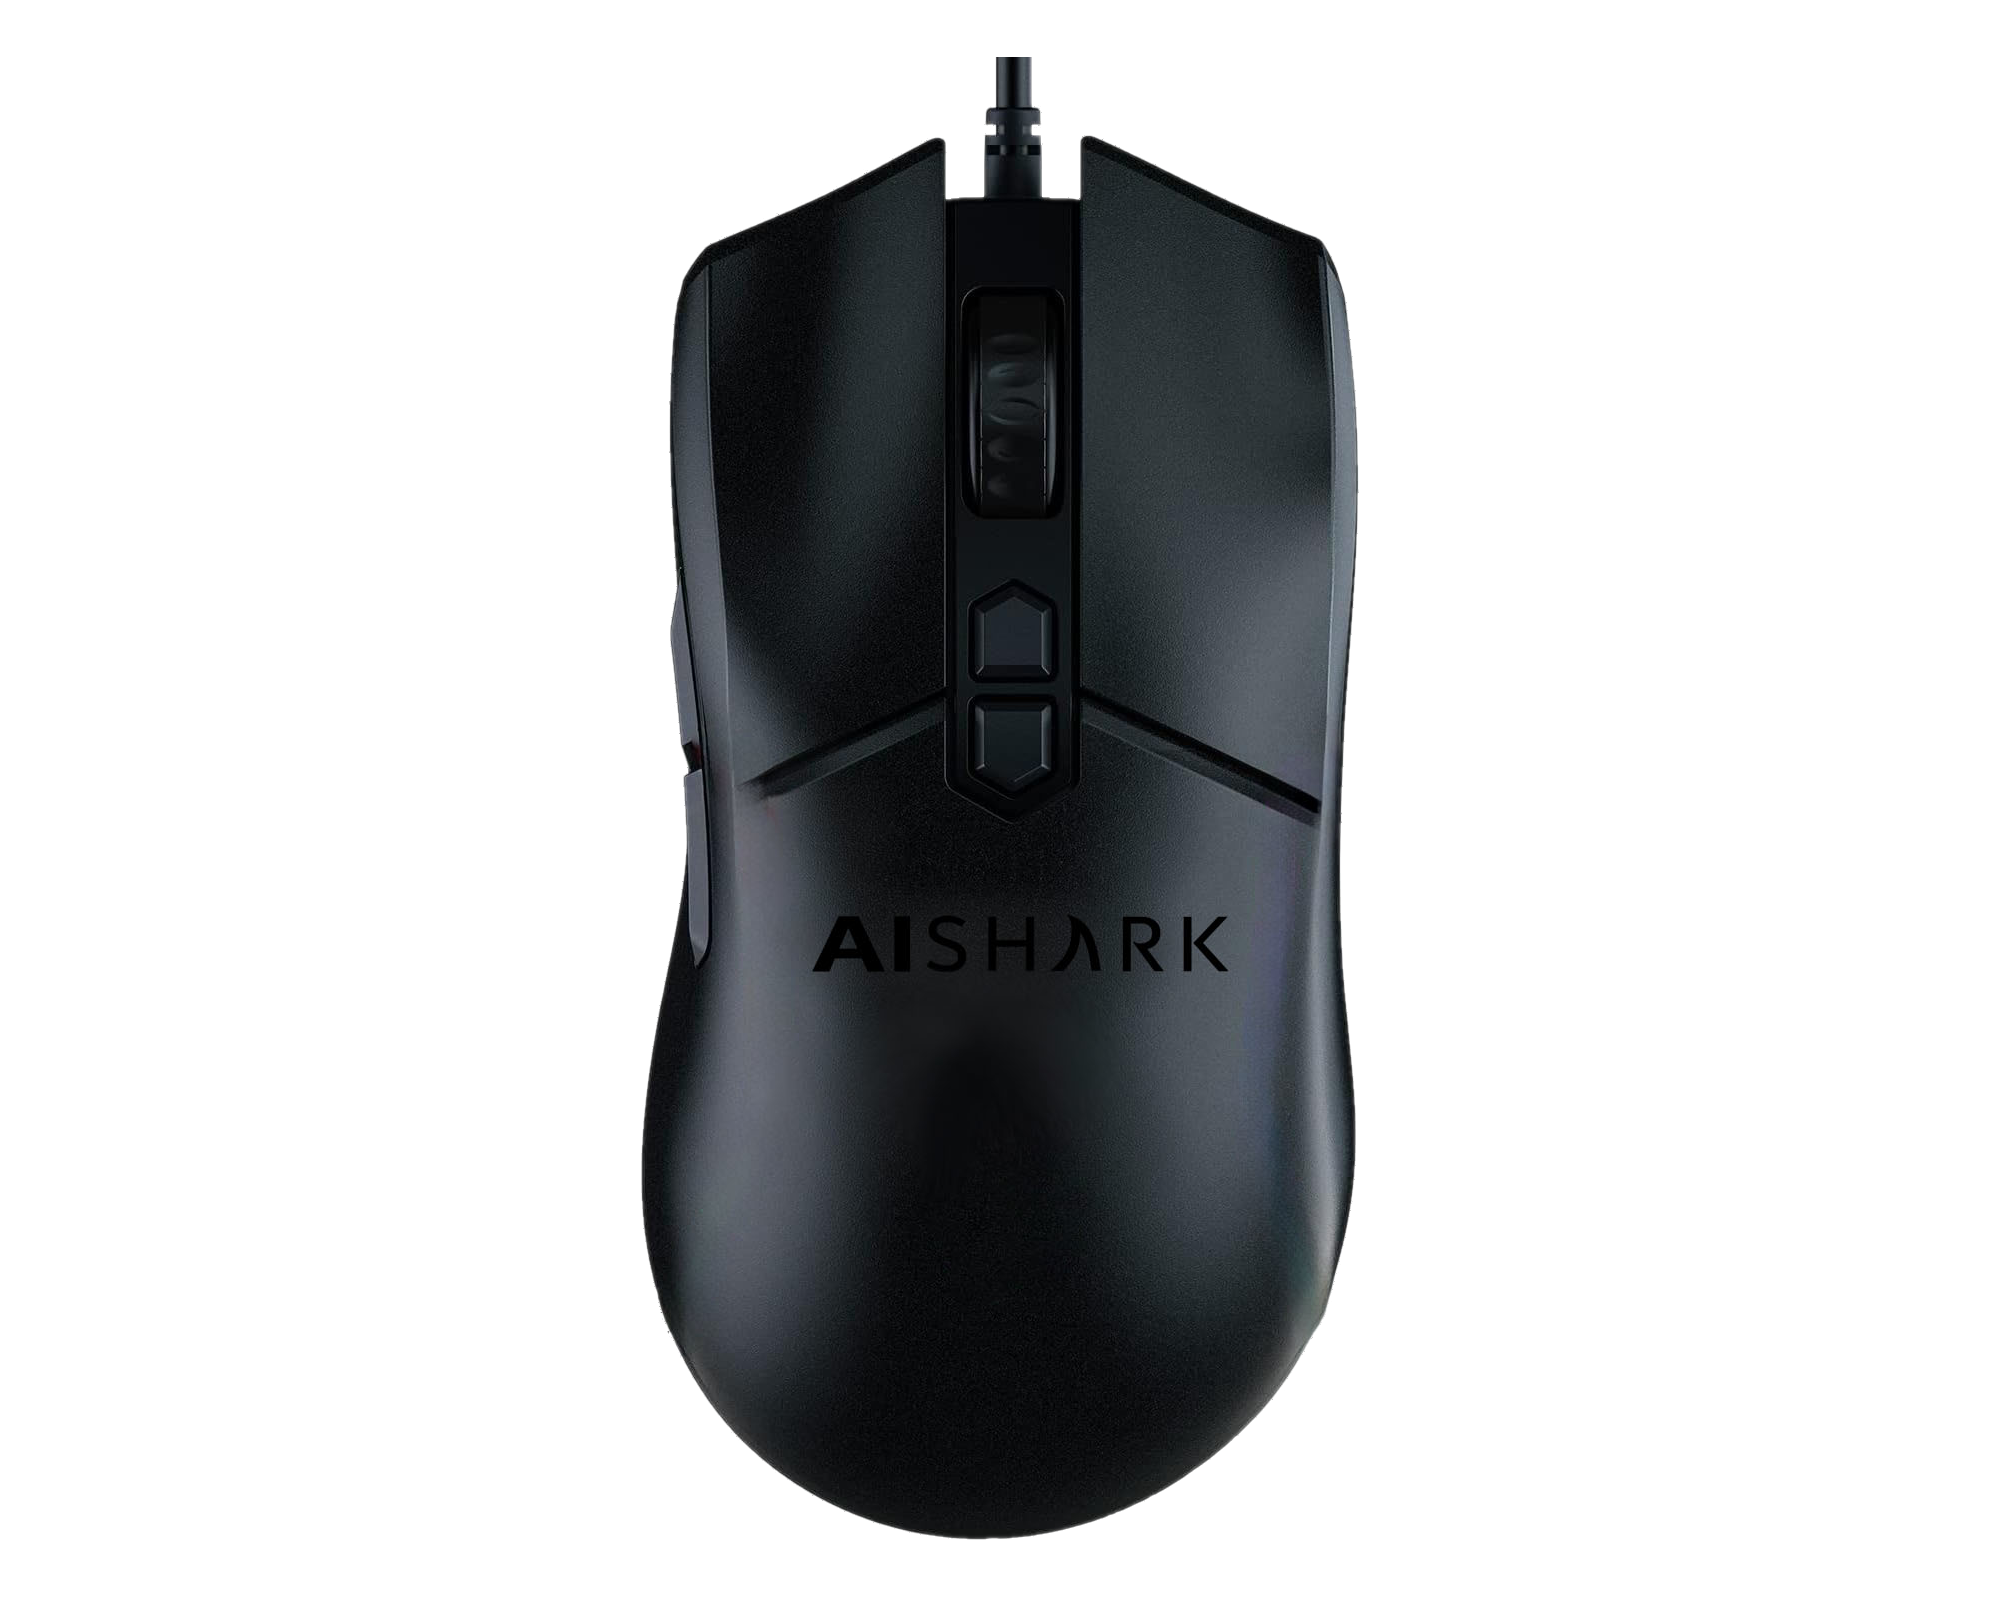 AI Shark Mouse